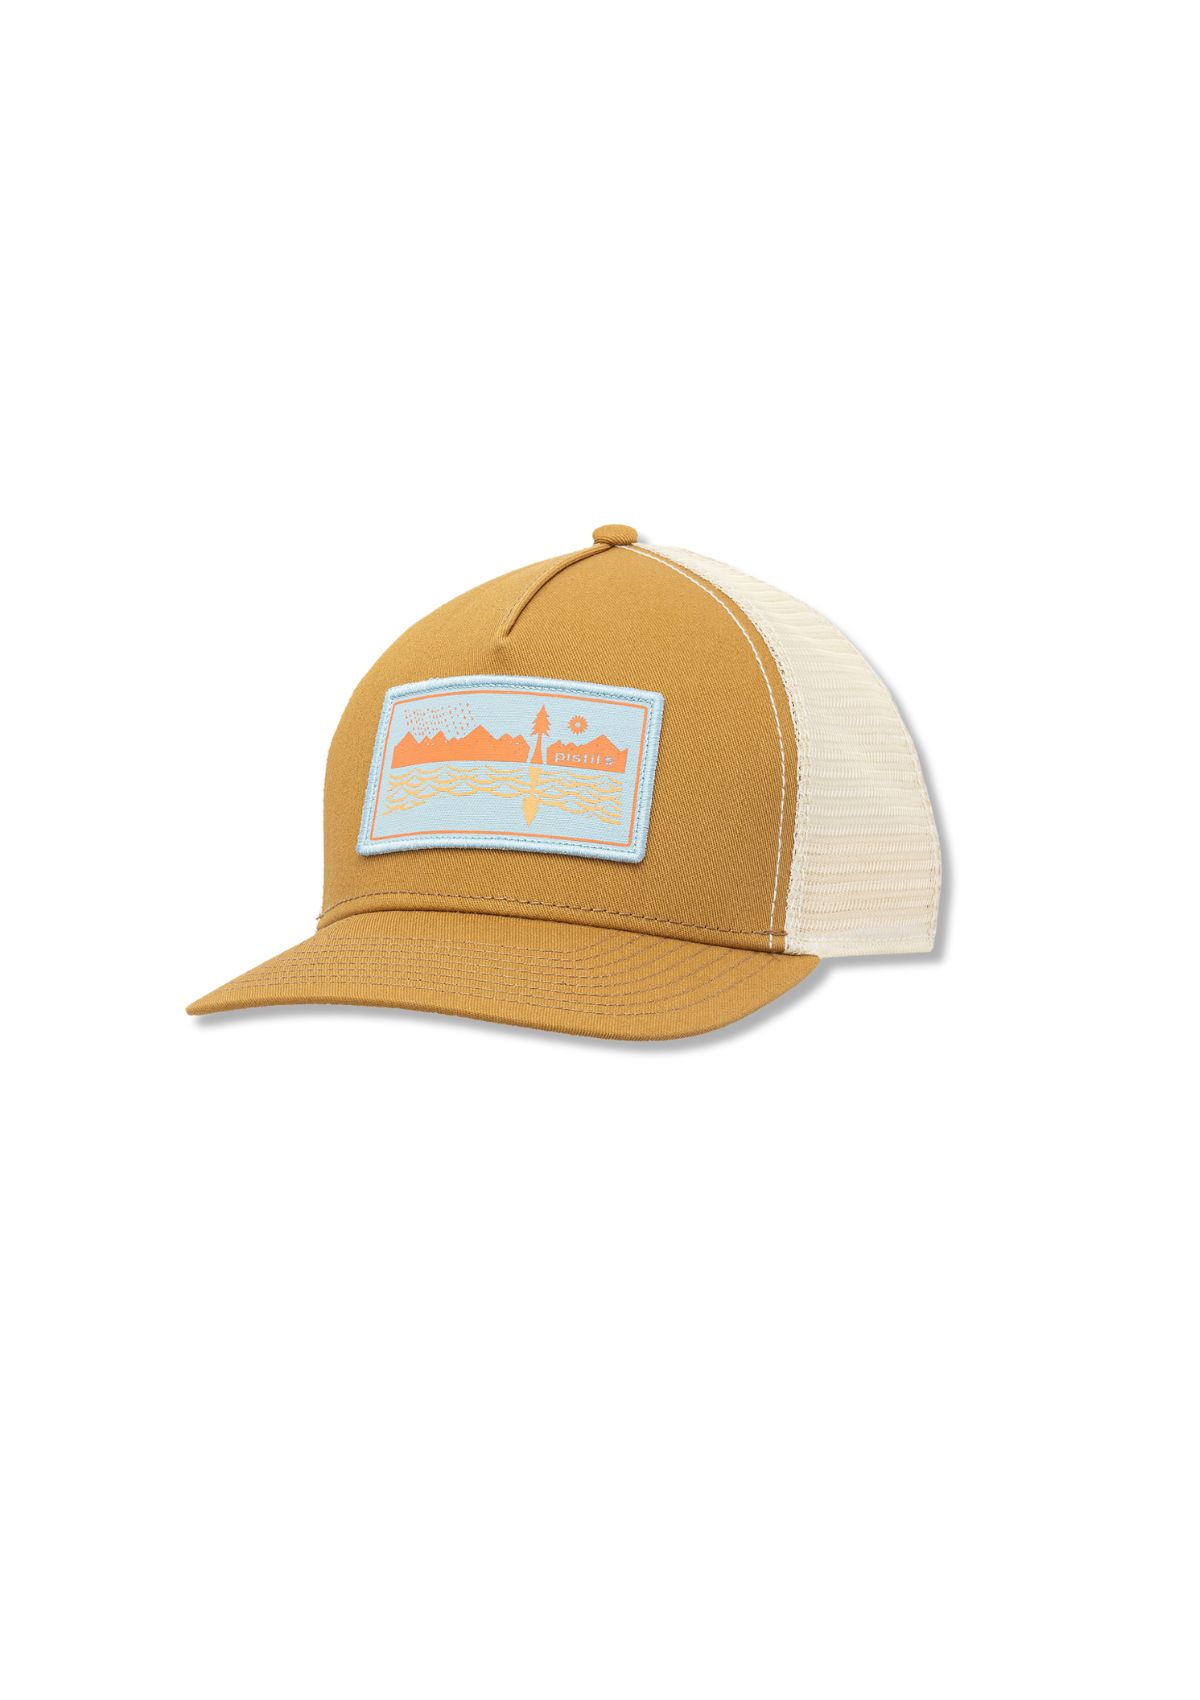 Valley Girl Trucker Hat - Camel -Pistil /Fox River/ FTP Designs / Isotoner / Totes- Ruby Jane-